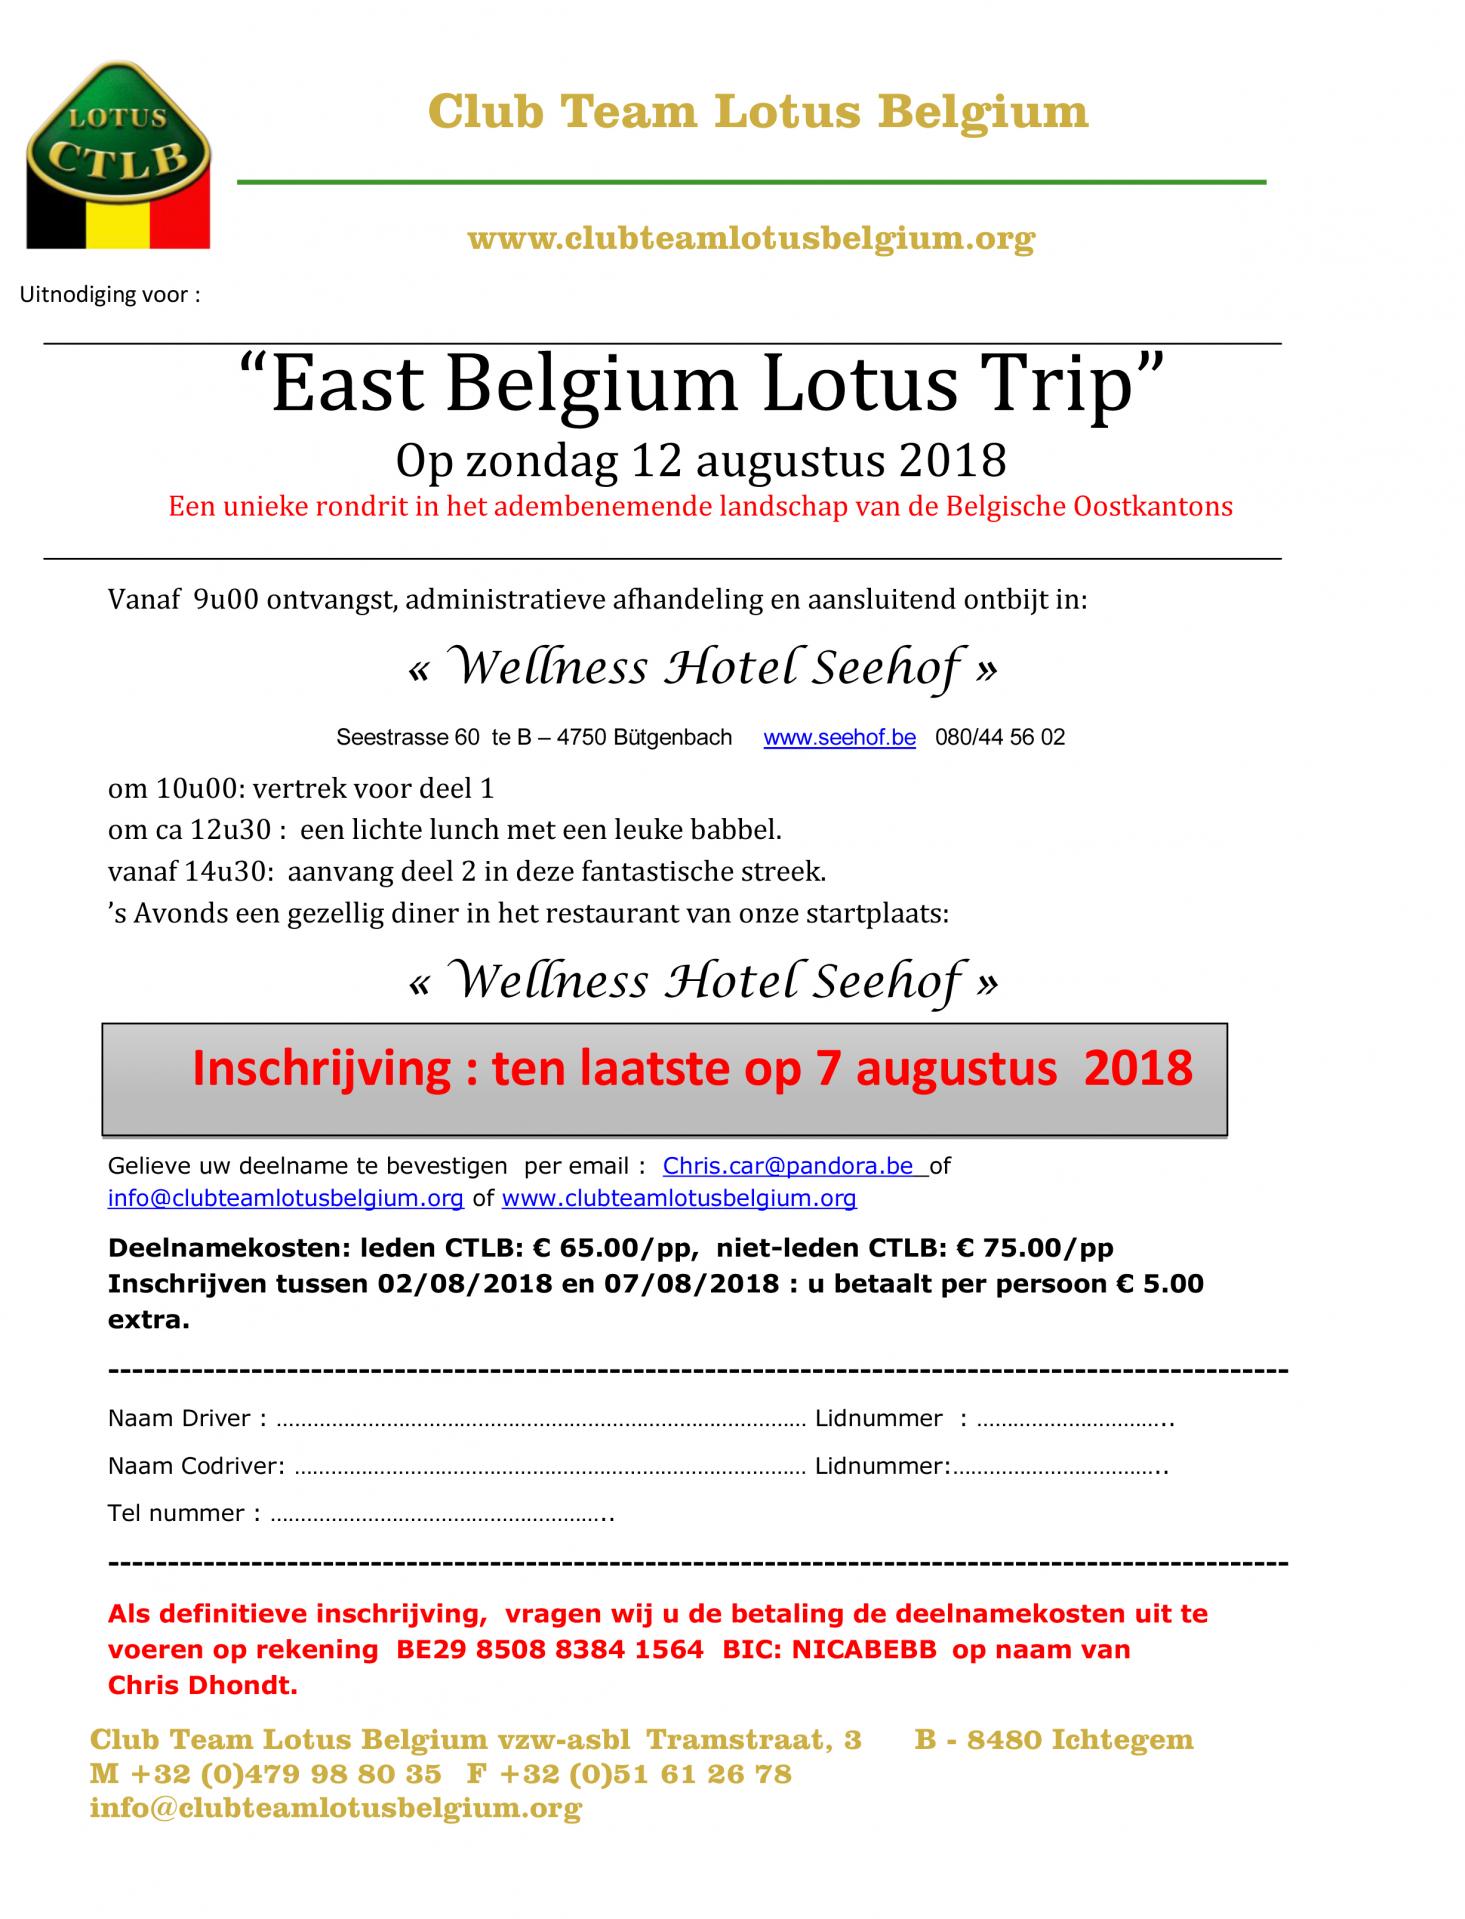 Uitnodiging east belgium lotus trip 2018